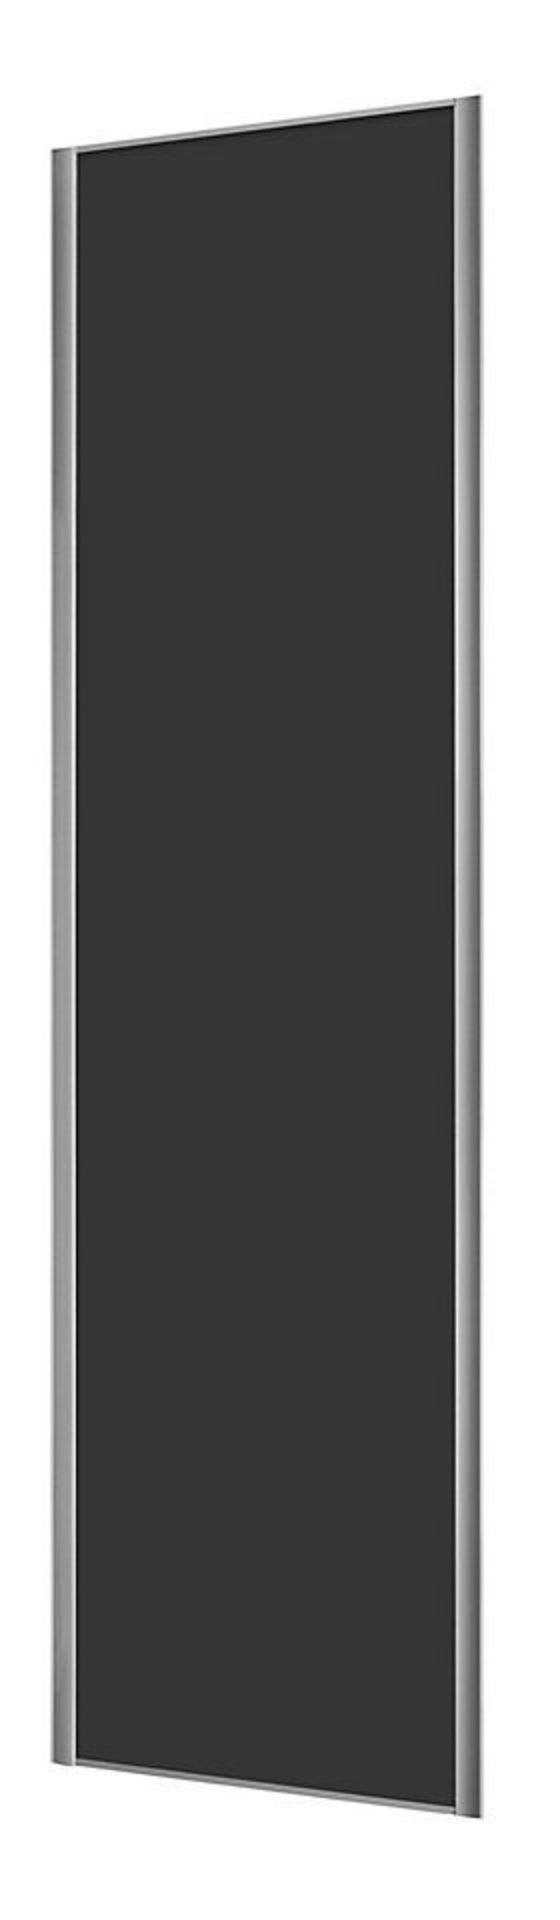 1 x VALLA 1 Sliding Wardrobe Door In Dark Grey With Grey Lacquered Steel Profiles - CL373 - Ref: NC2